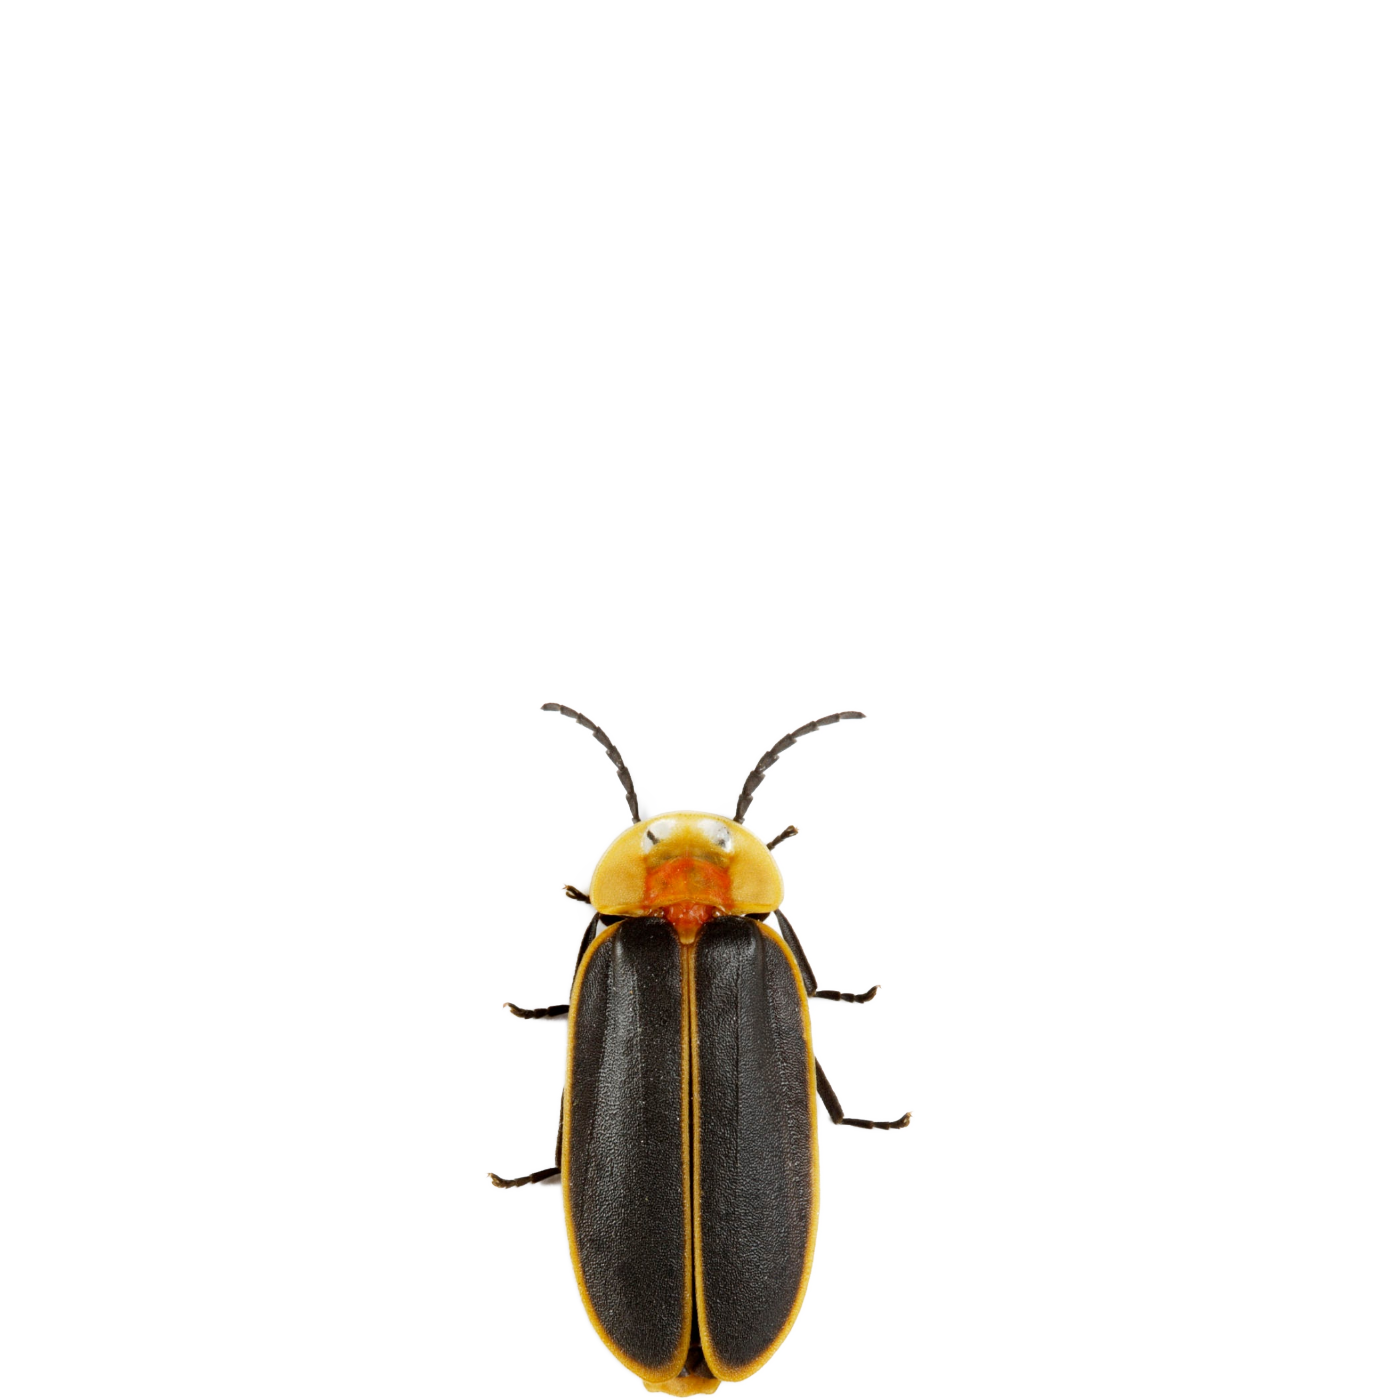 Fireflies PNG Image